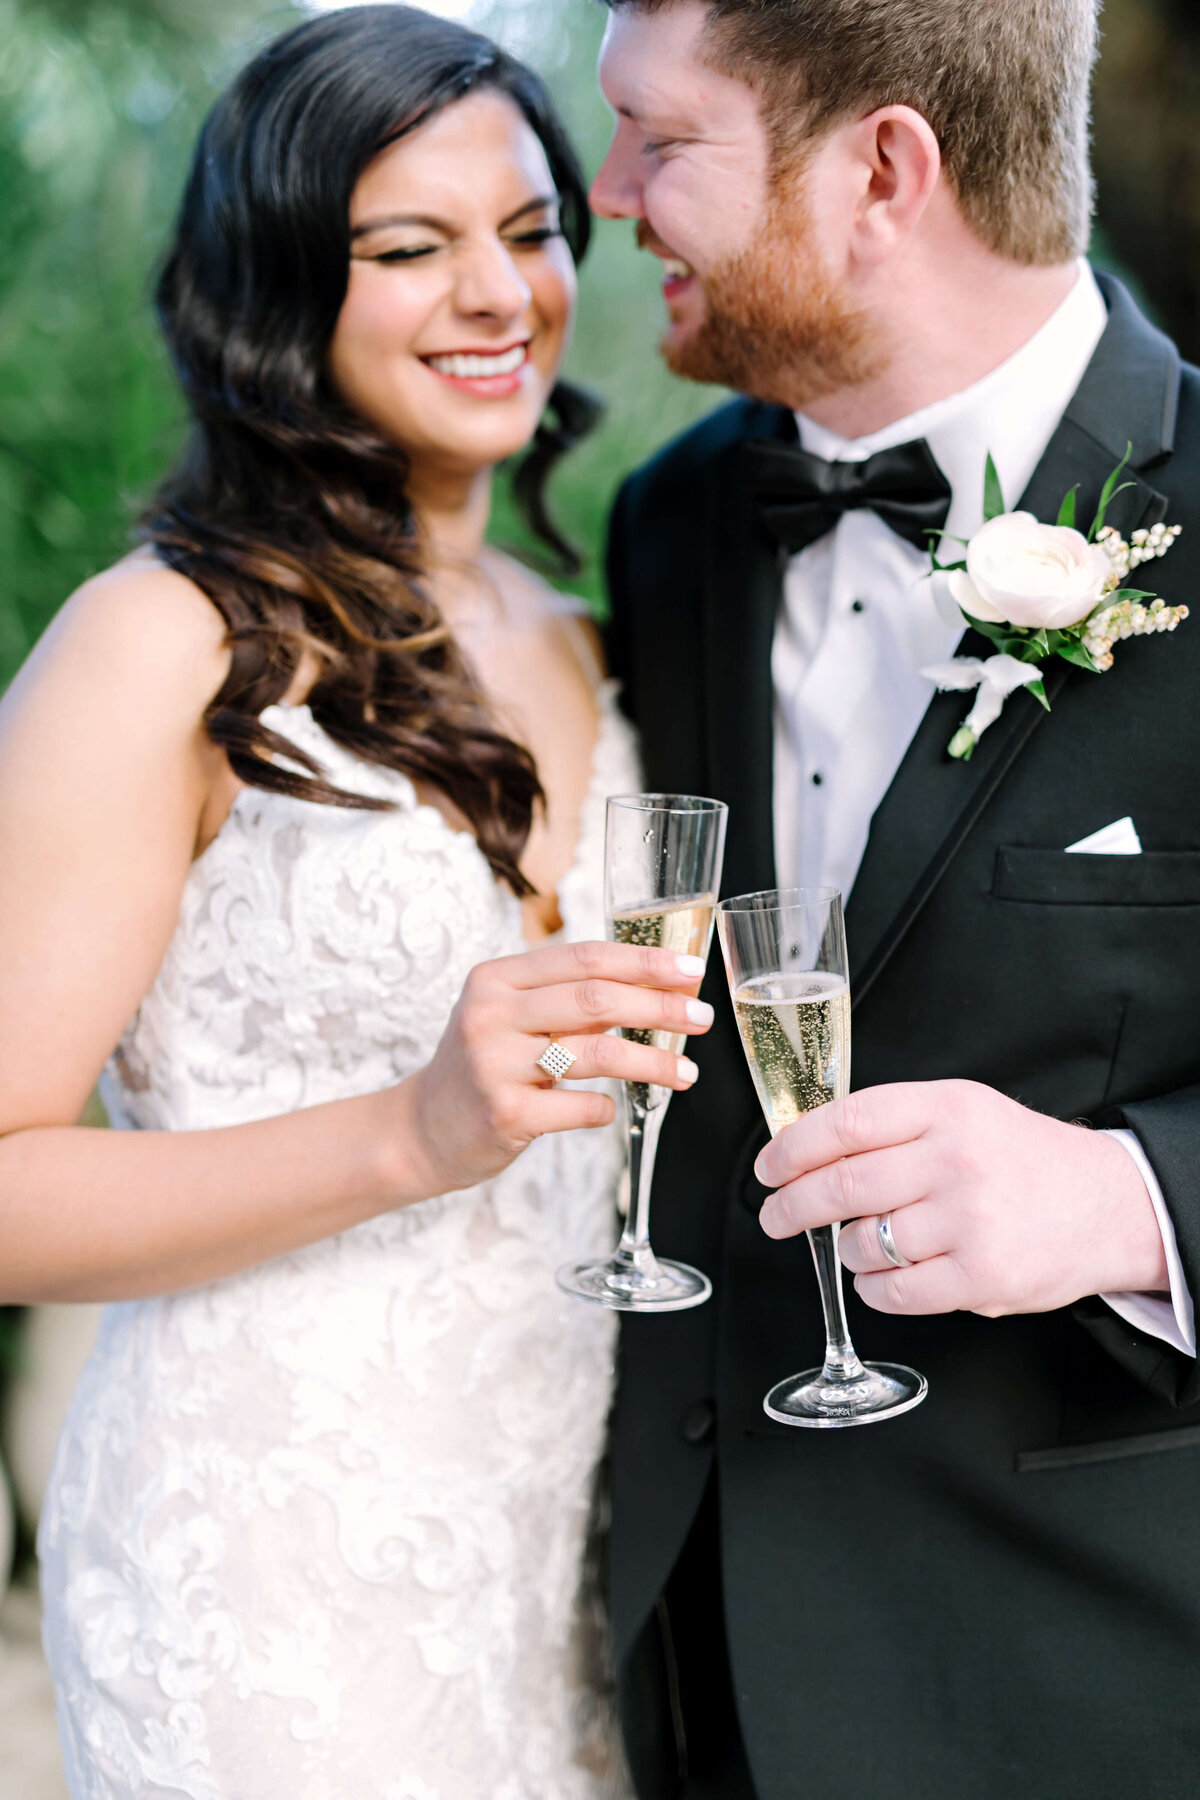 bride and groom in classic wedding attire